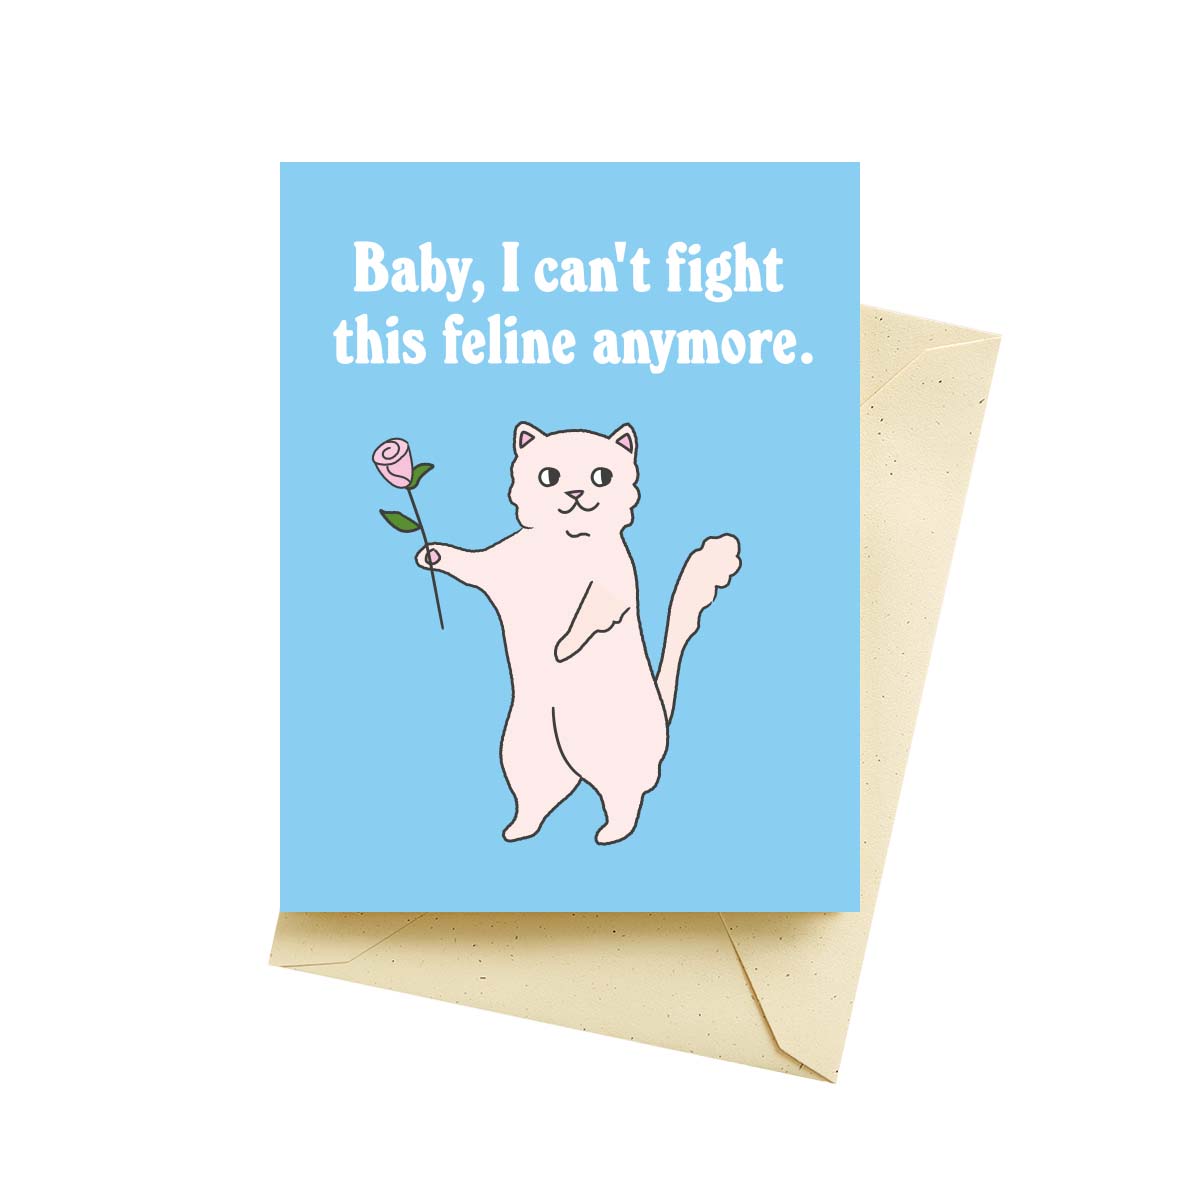 This Feline Love Greeting Card